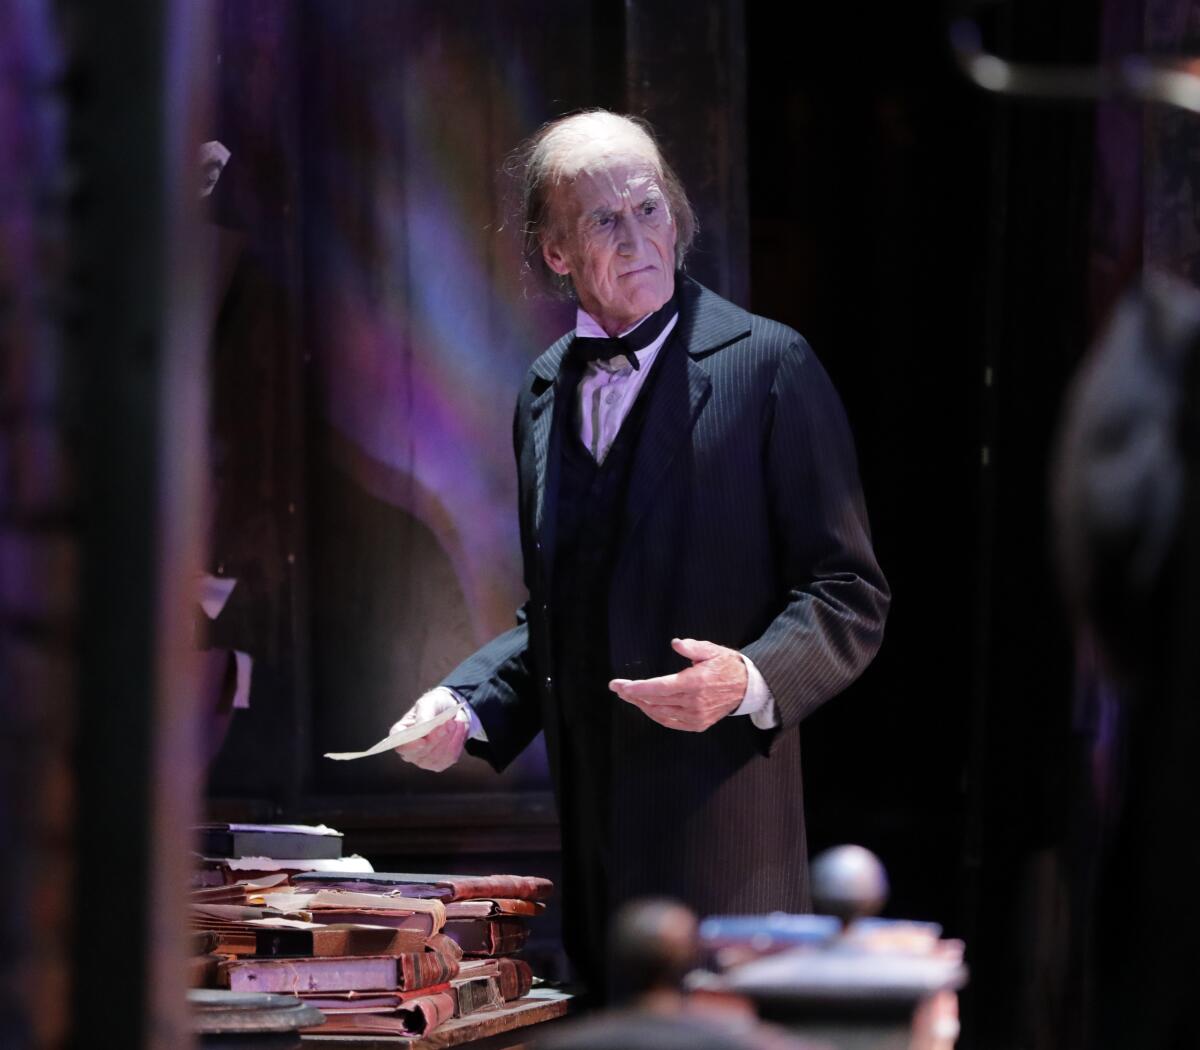 Hal Landon Jr., 78, has played Scrooge in more than 1,400 performances.